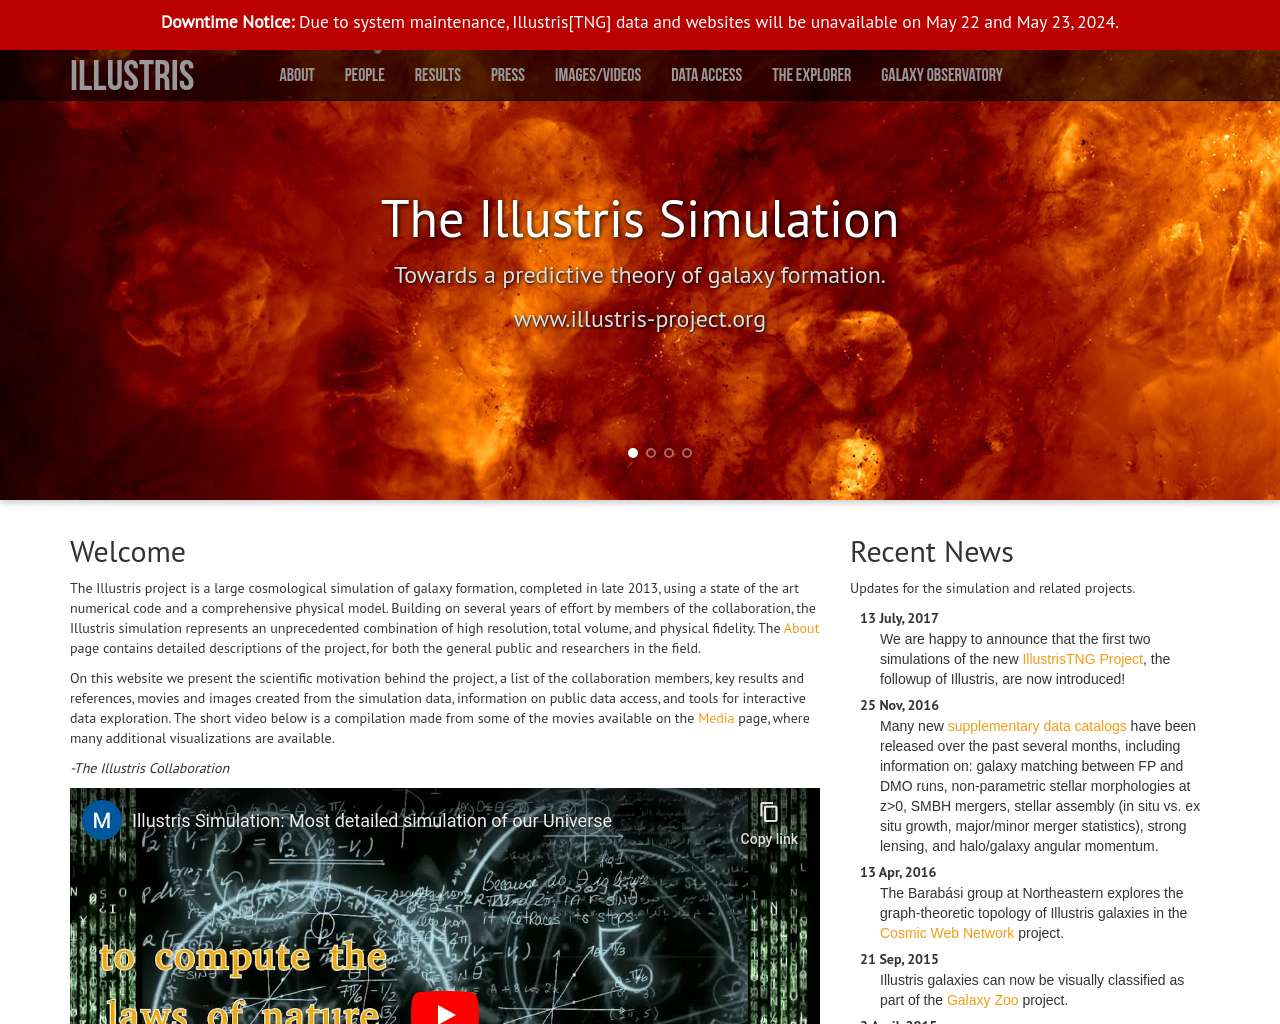 illustris-project.org